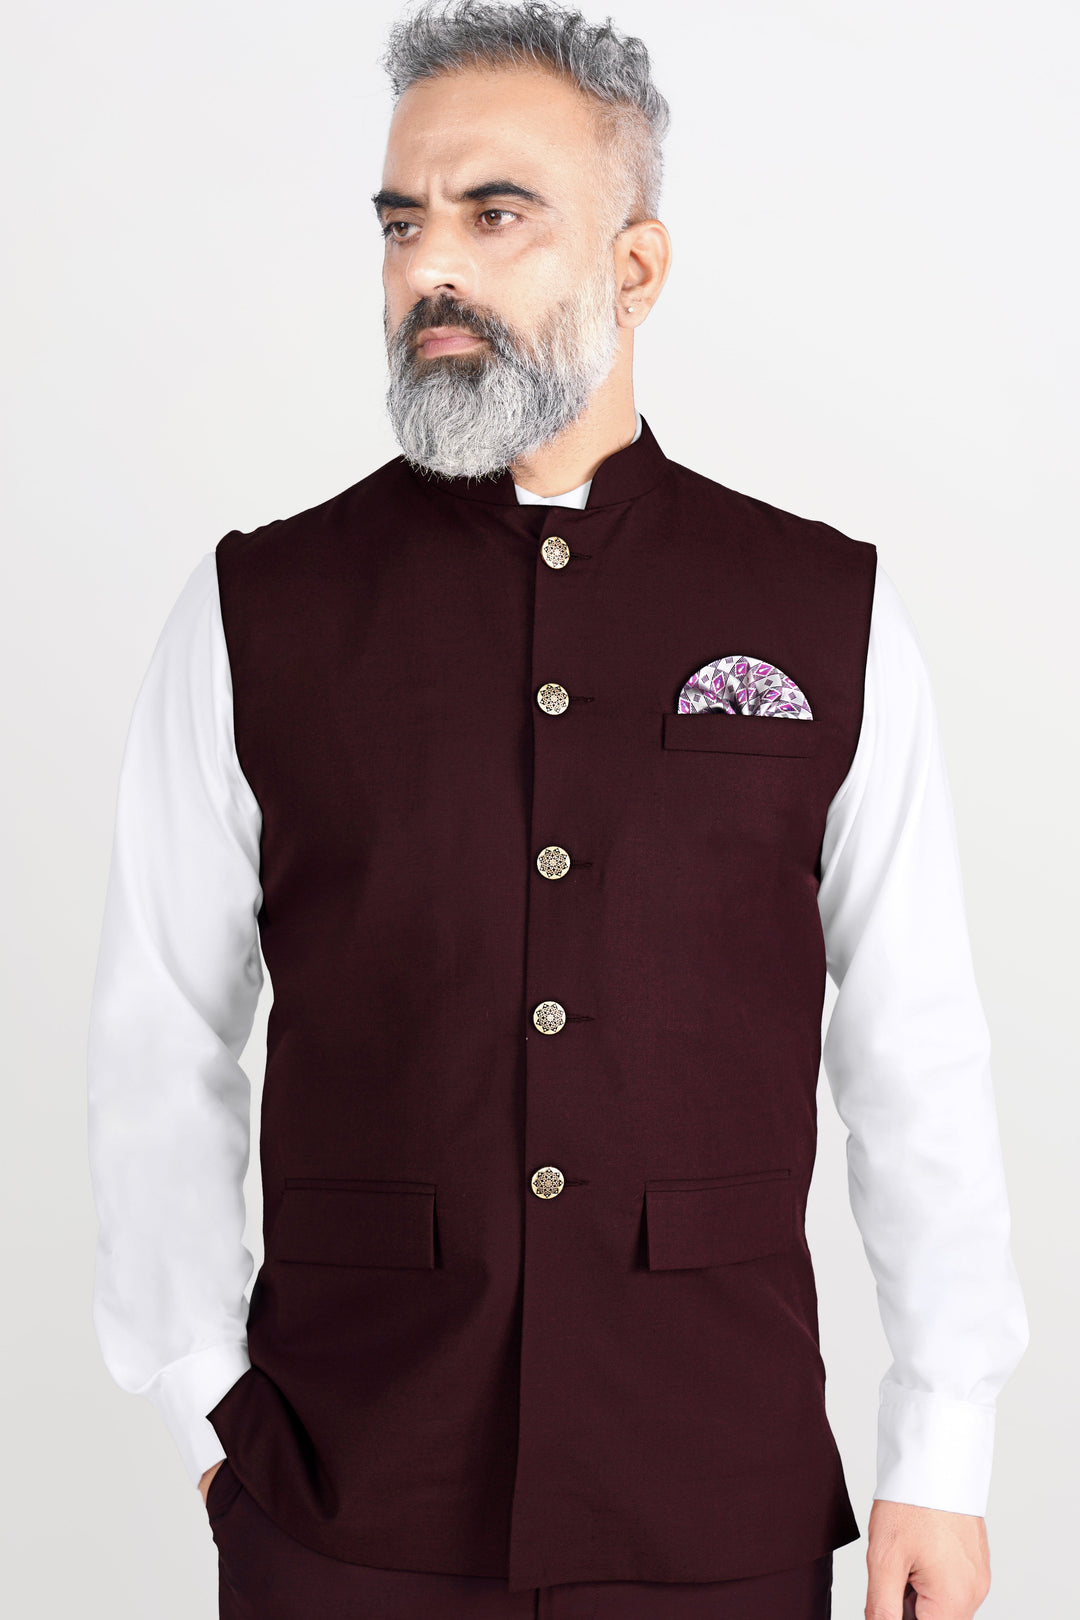 Clergy Jacket BlackRed clergyjacketbr Menz Fashion